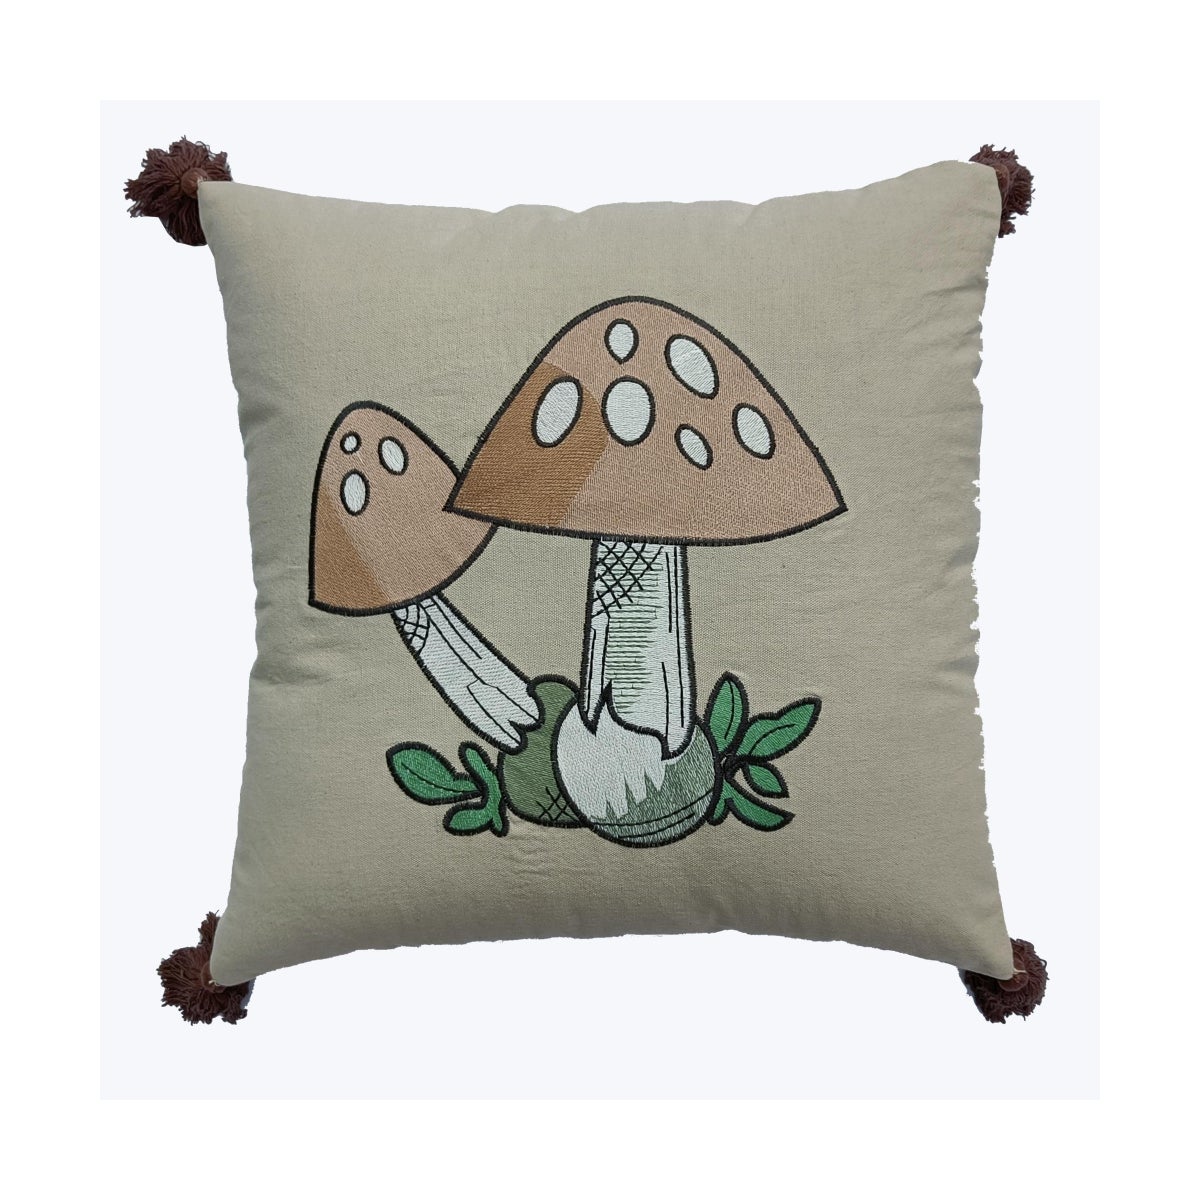 Cotton Square Pillow with Mushroom Design &Tassels